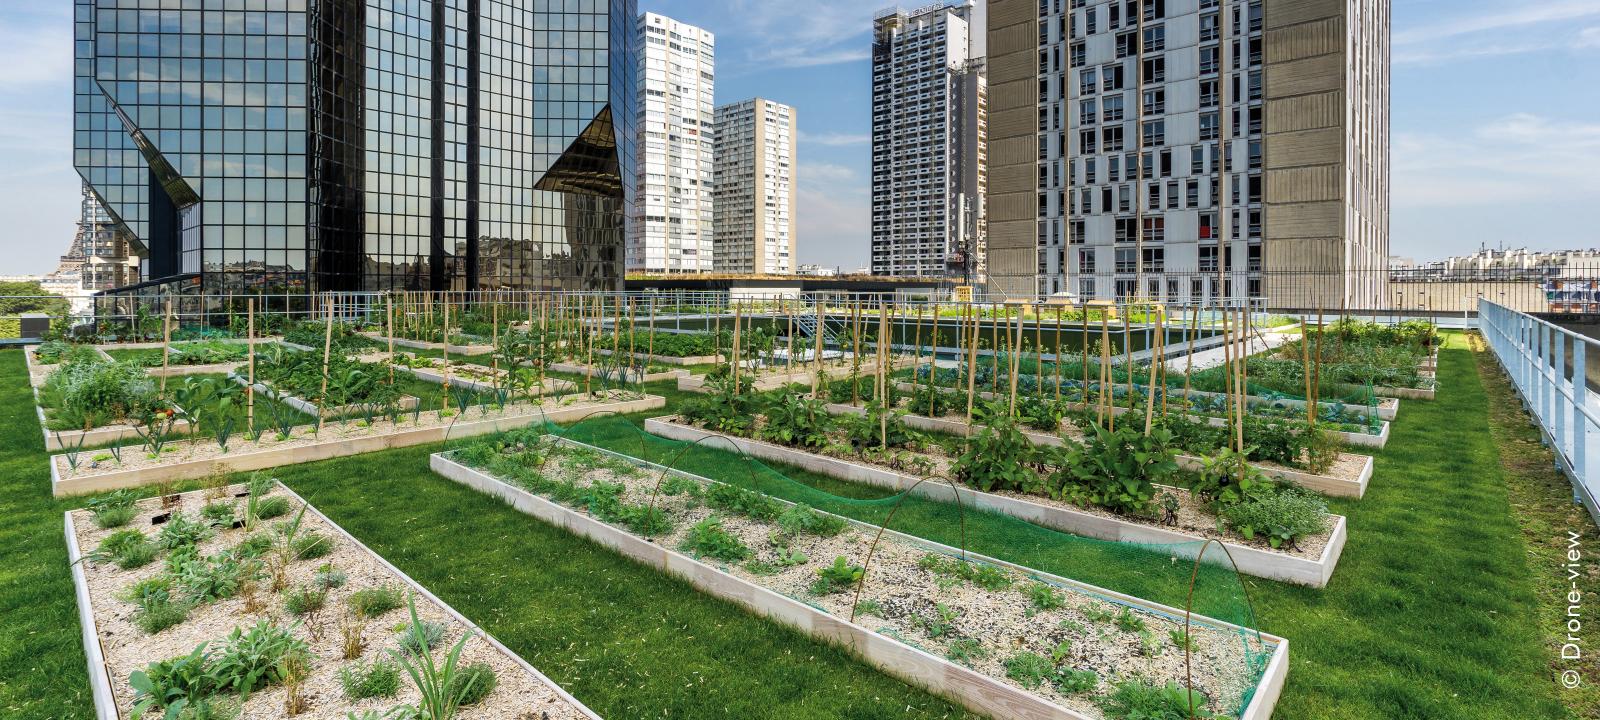 Urban rooftop farming